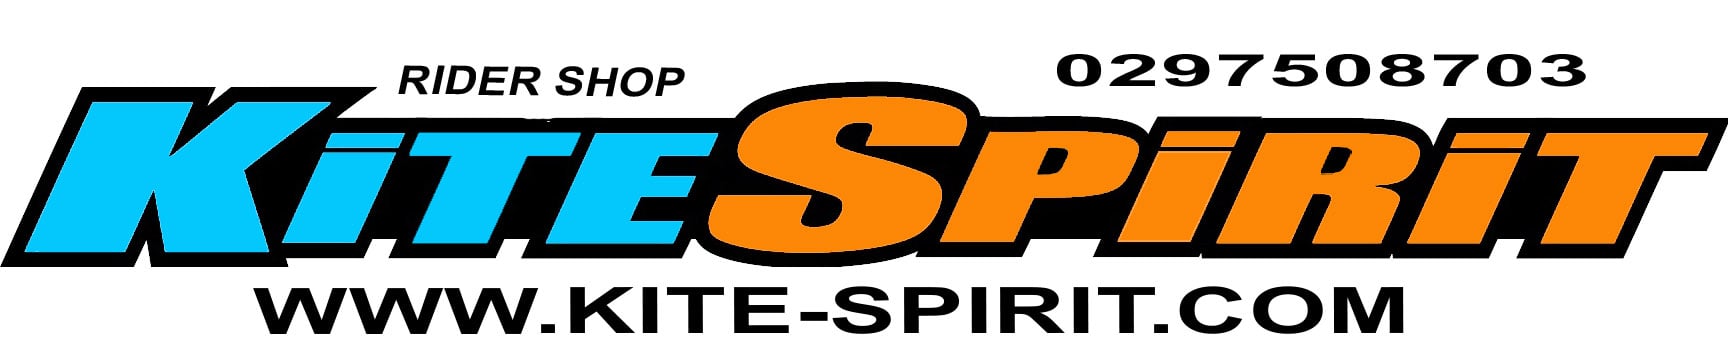 Logo Kite spirit